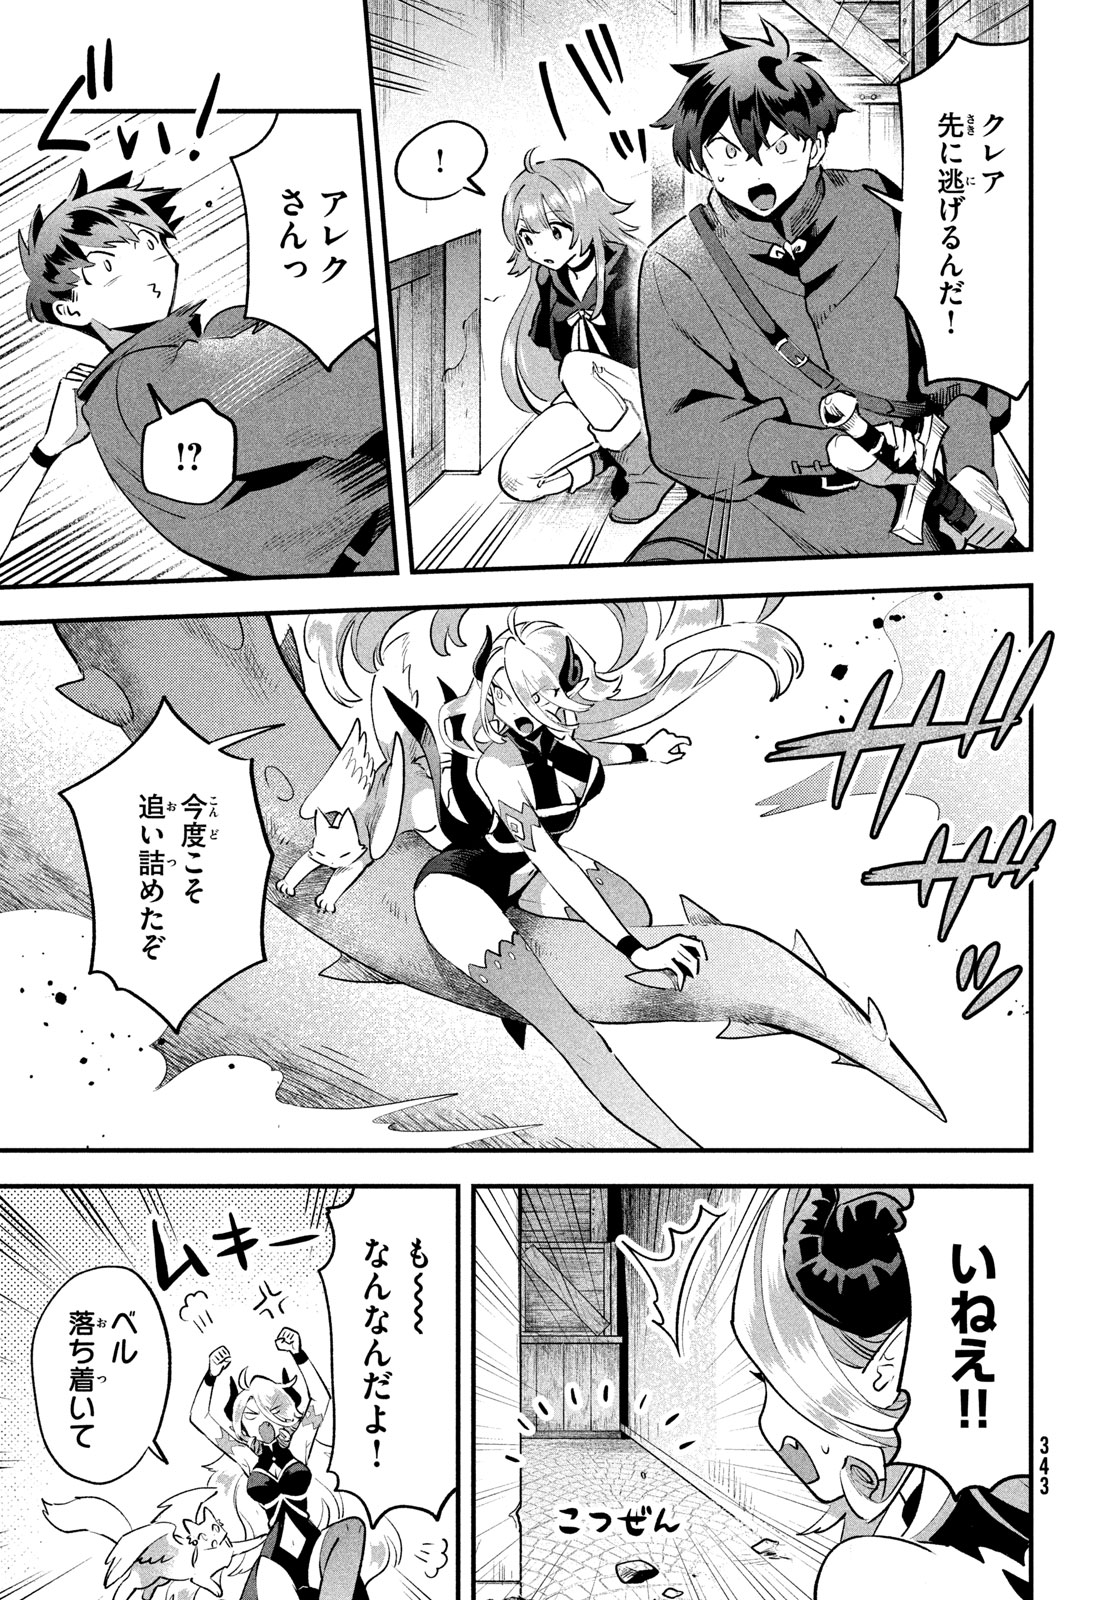 7-nin no Nemuri Hime - Chapter 44 - Page 3